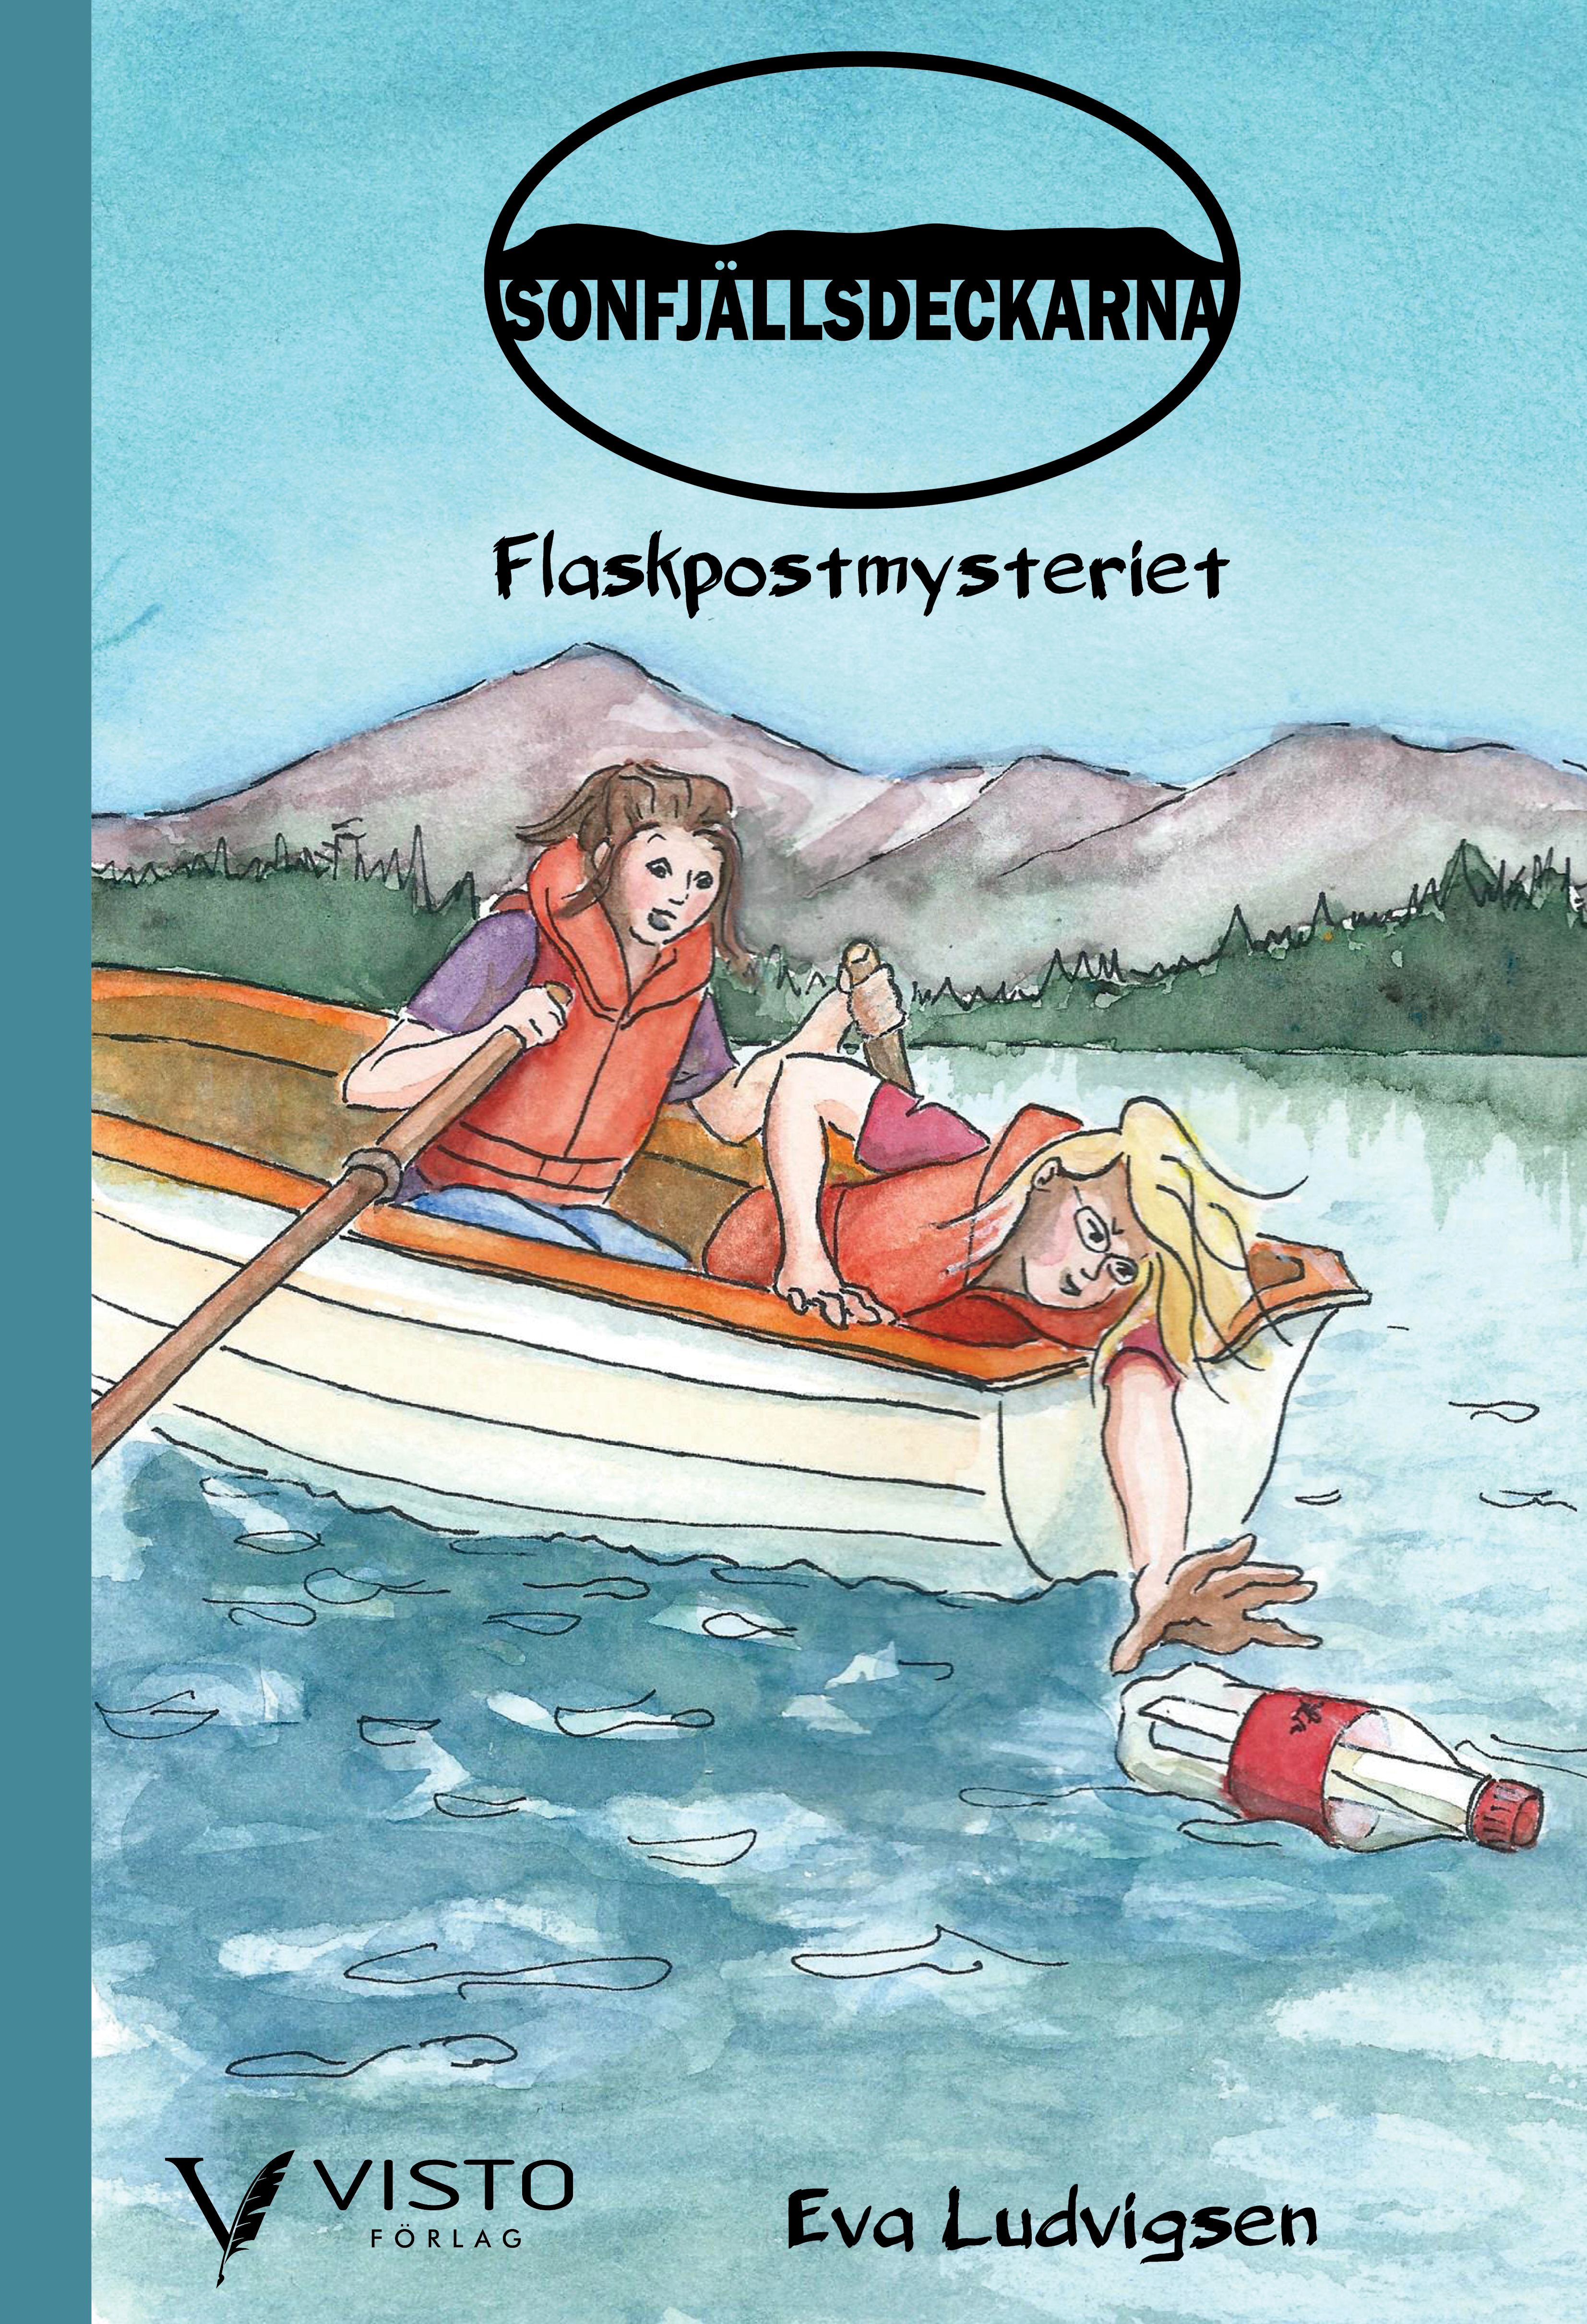 Sonfjällsdeckarna - Flaskpostmysteriet, eBook by Eva Ludvigsen